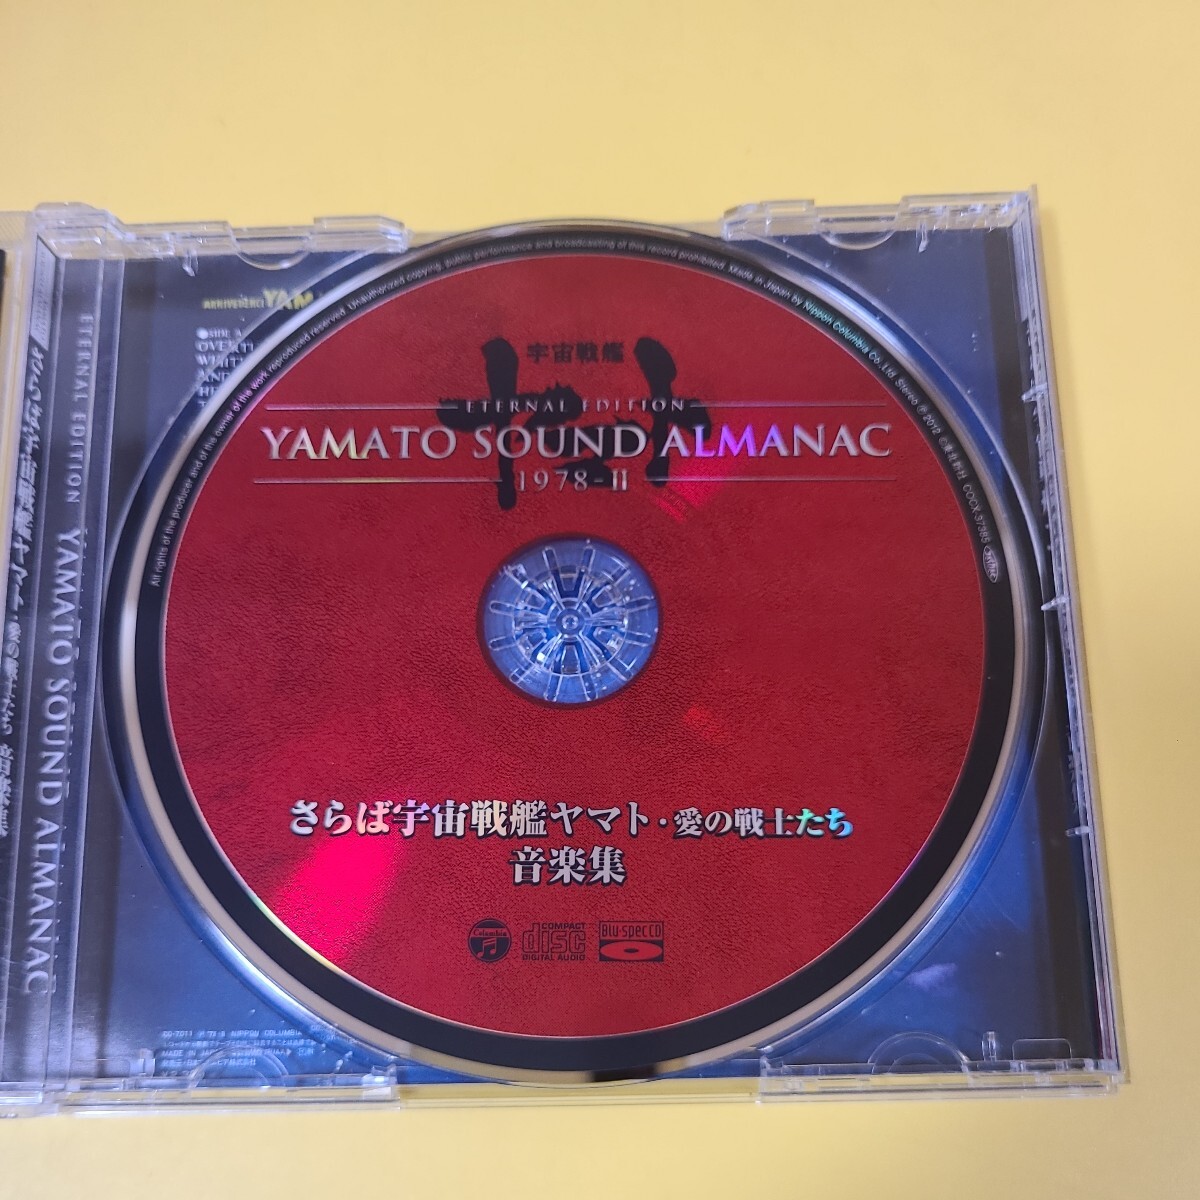 54◆◇CD YAMATO SOUND ALMANAC 1978-II さらば宇宙戦艦ヤマト 愛の戦士たち 音楽集 Blu-spec CD COCX-37385◇◆の画像3